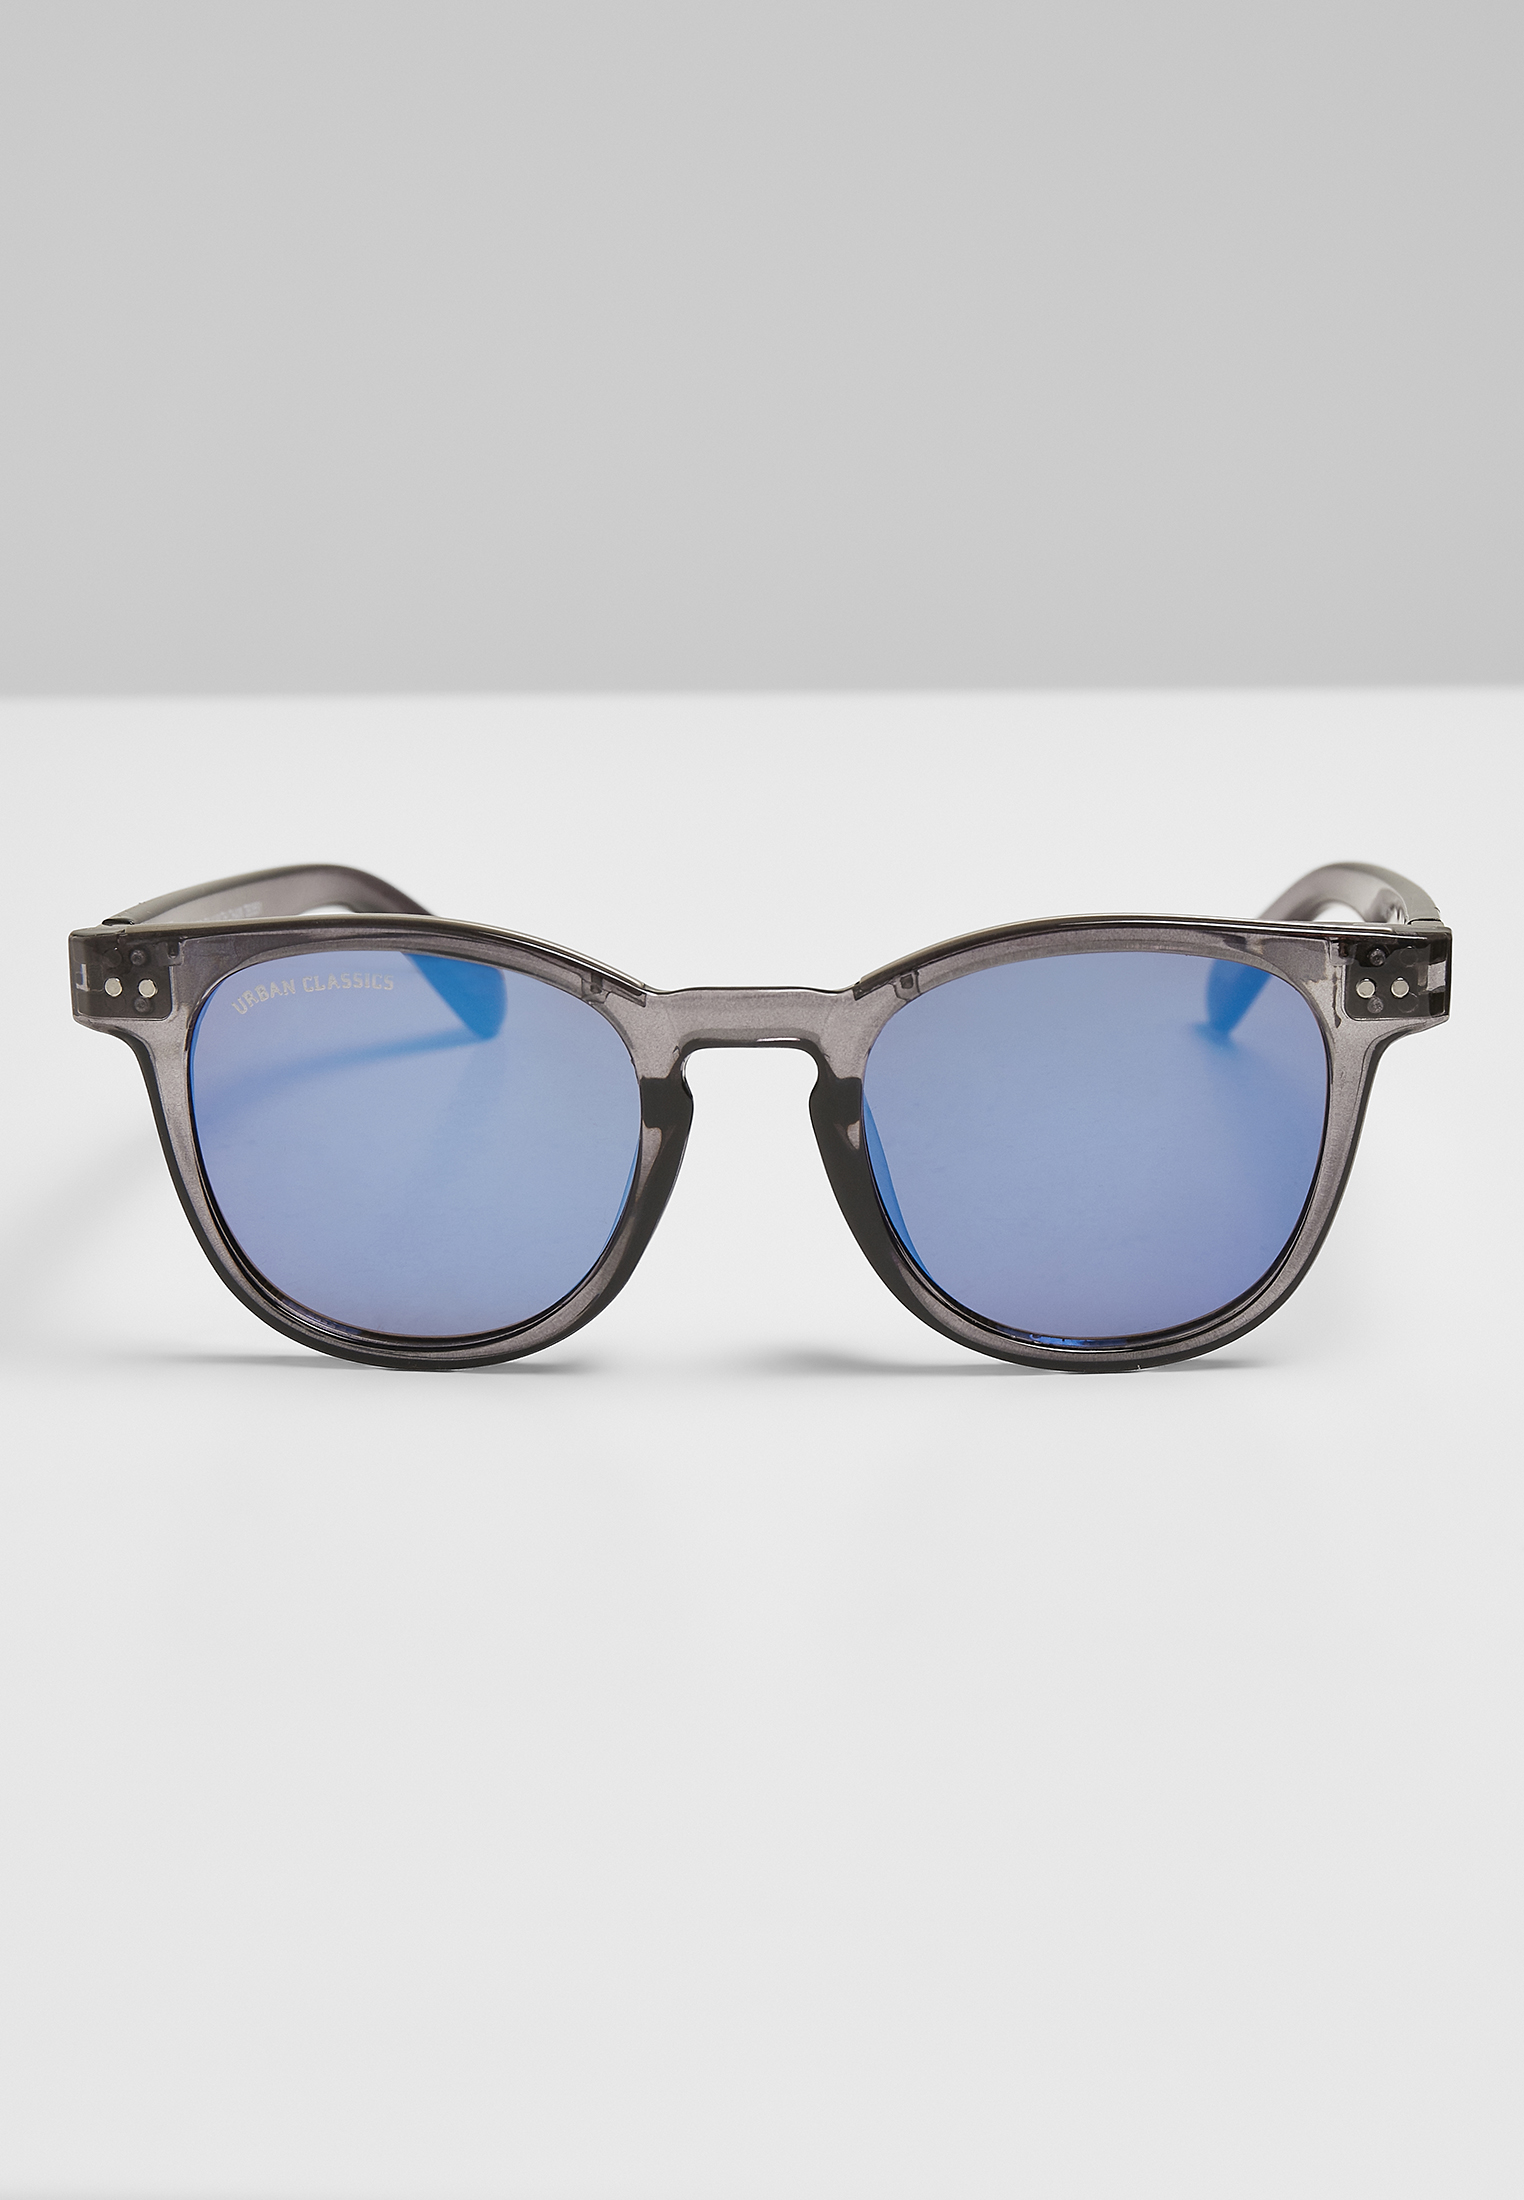 Sonnenbrillen Sunglasses Italy with chain in Farbe grey/silver/silver